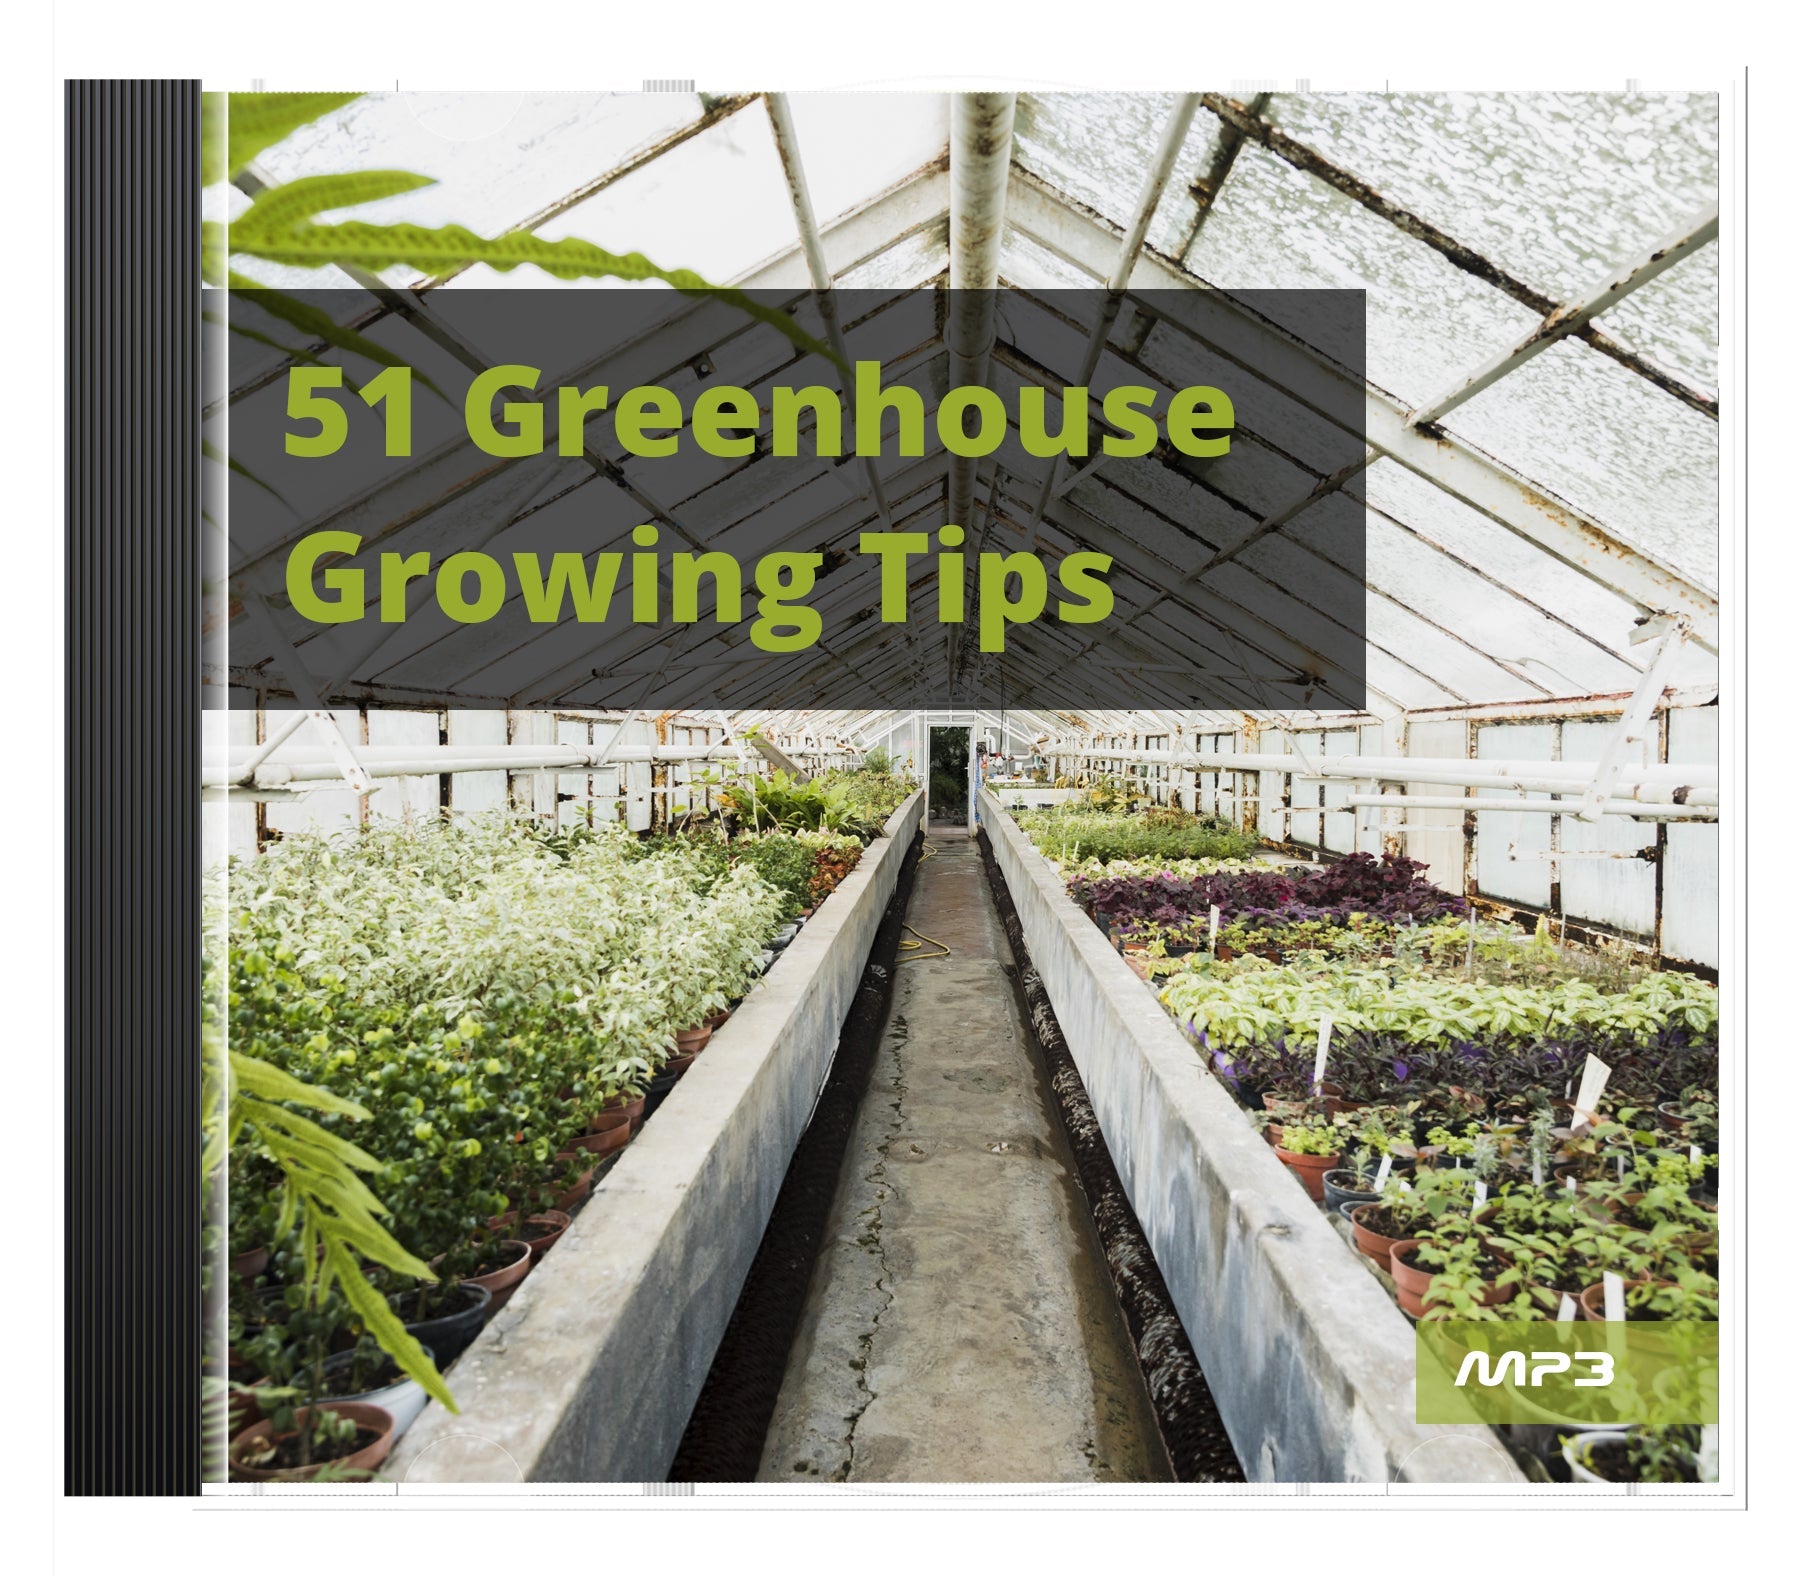 E-51 Greenhouse Growing Tips - Free eBook - English - Ashoof